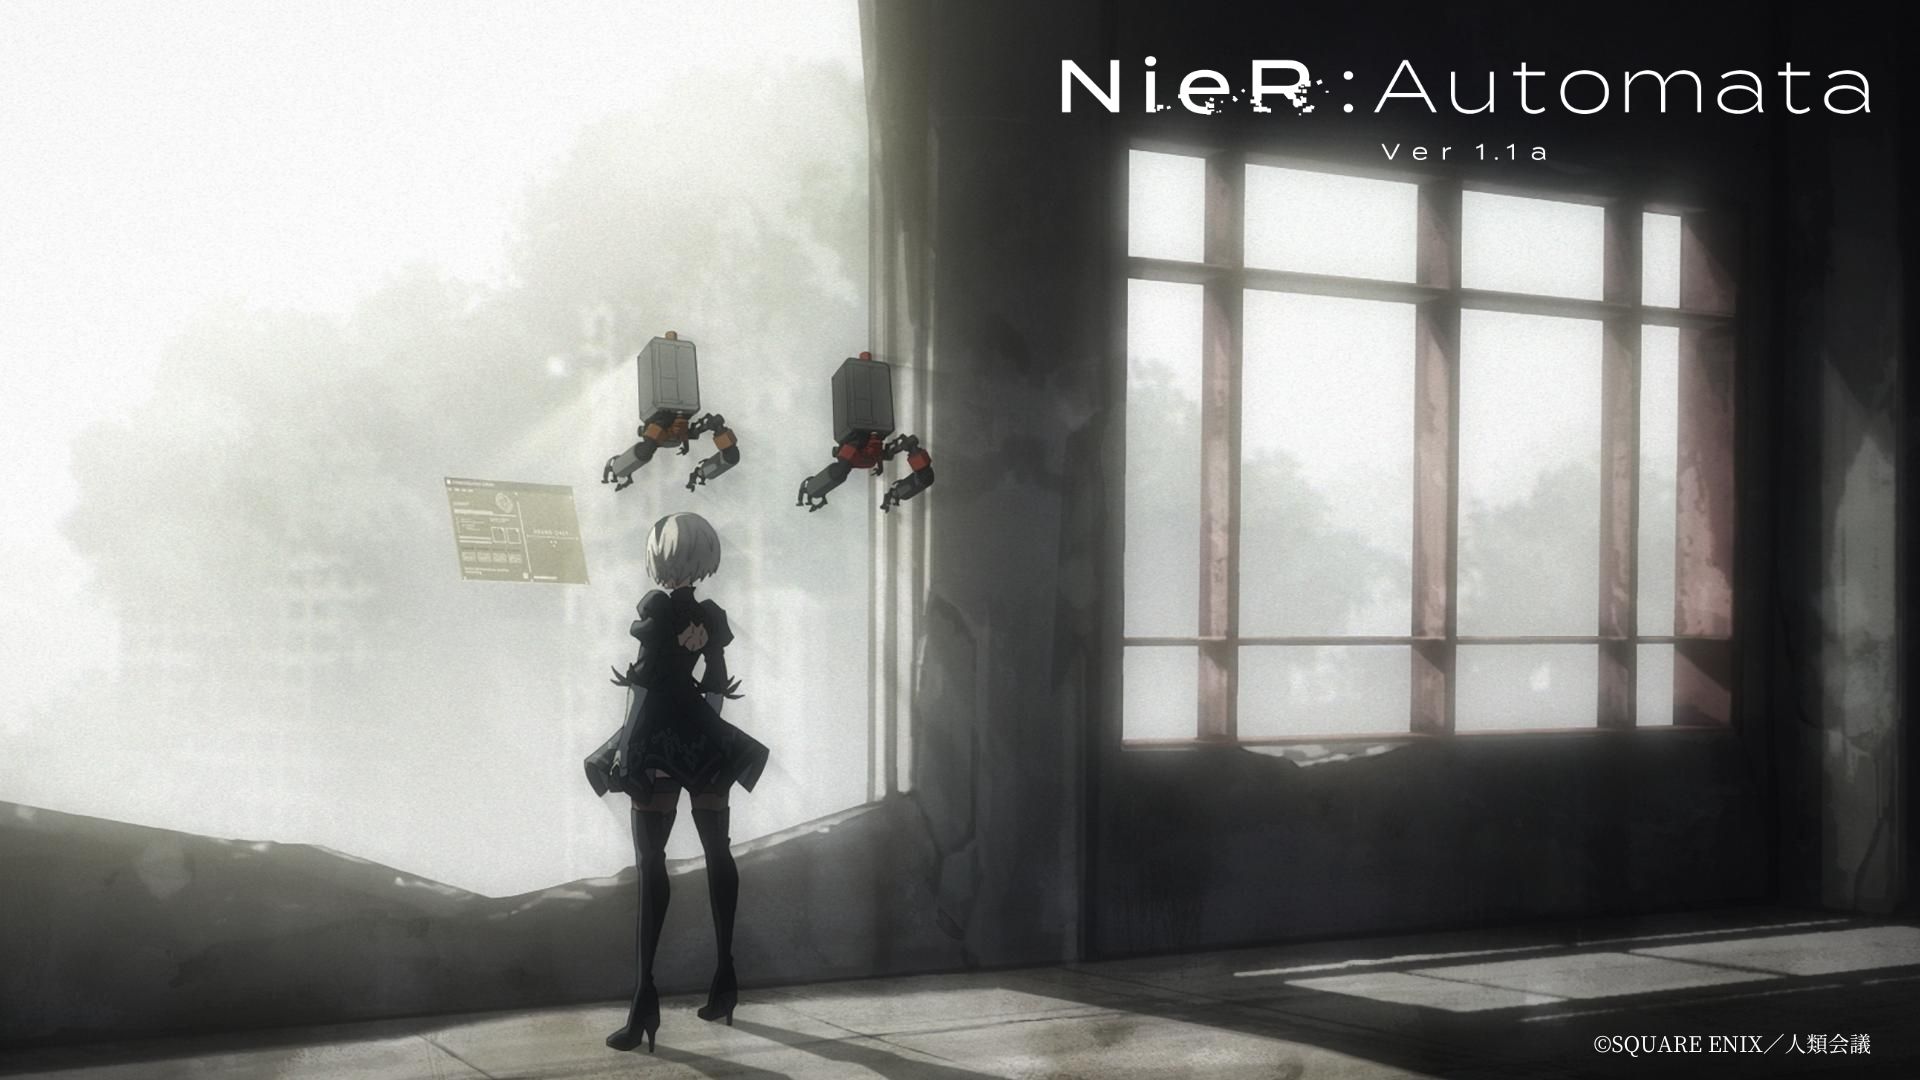 NieR:Automata Ver1.1a Anime Delays Again Due To Covid - Anime Explained